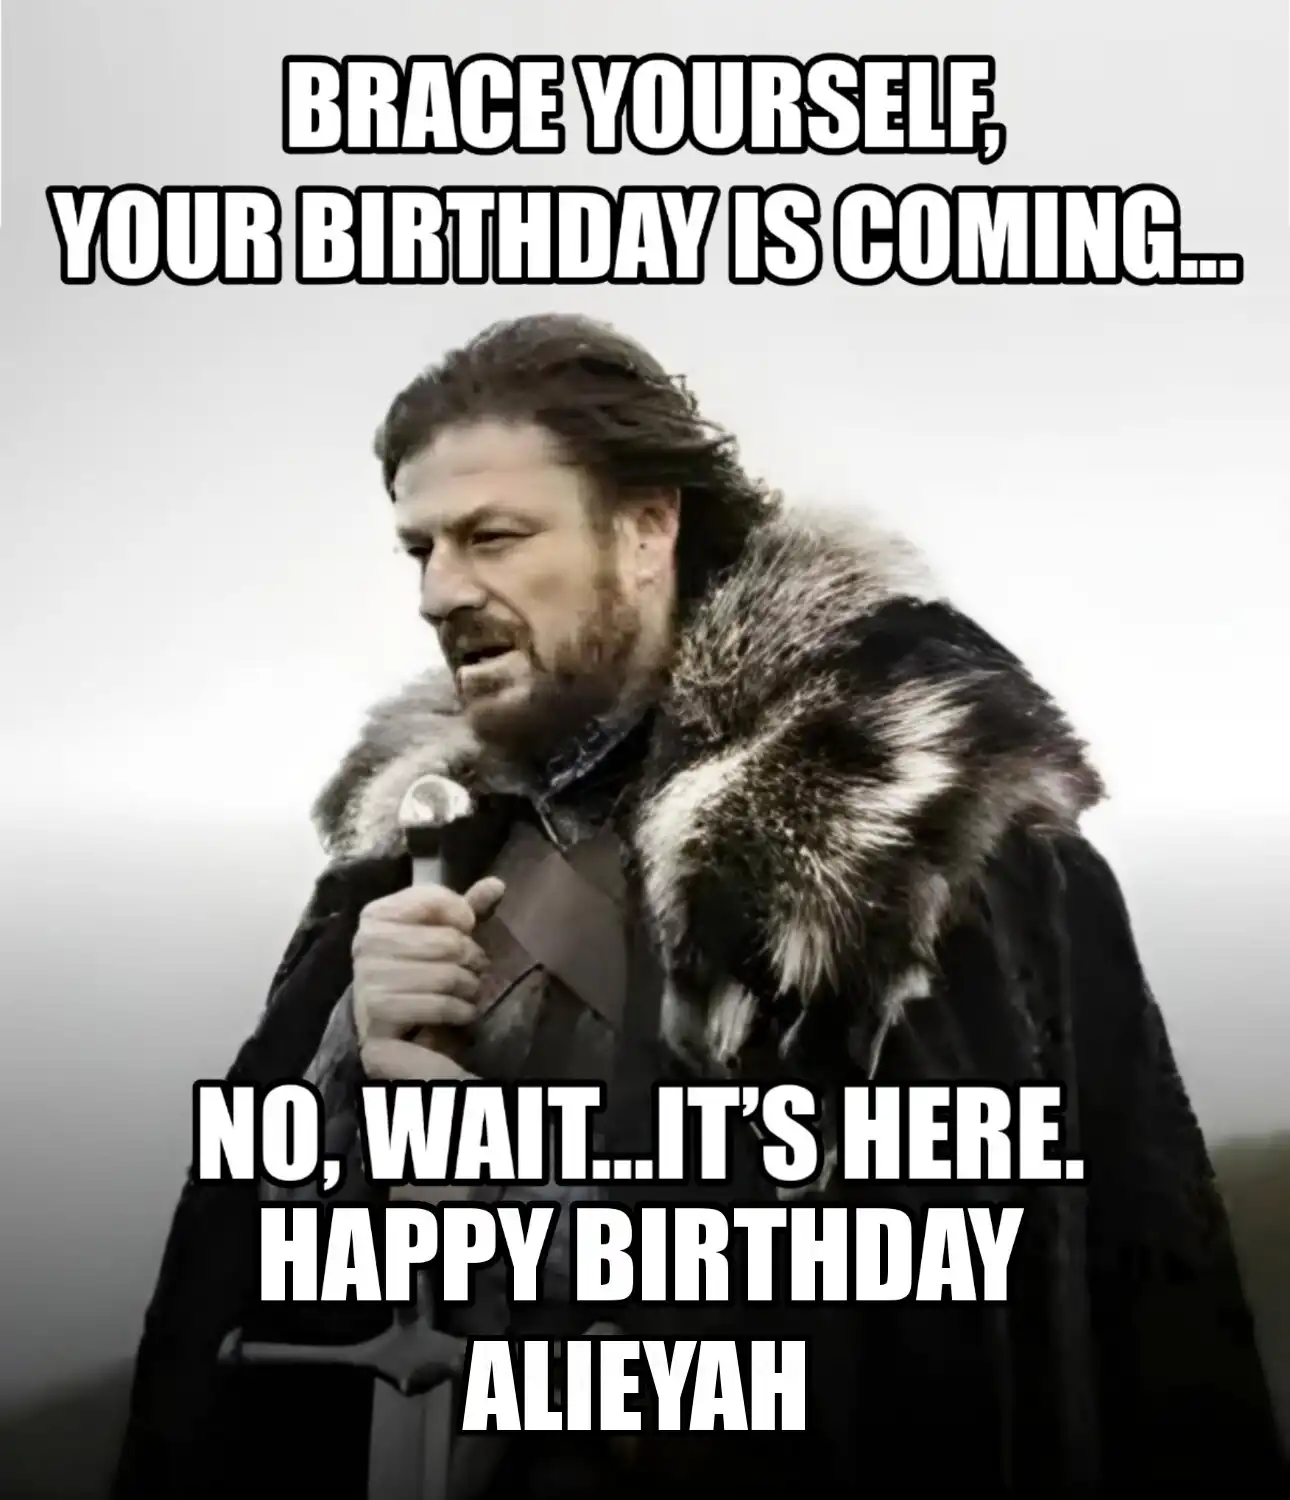 Happy Birthday Alieyah Brace Yourself Your Birthday Is Coming Meme